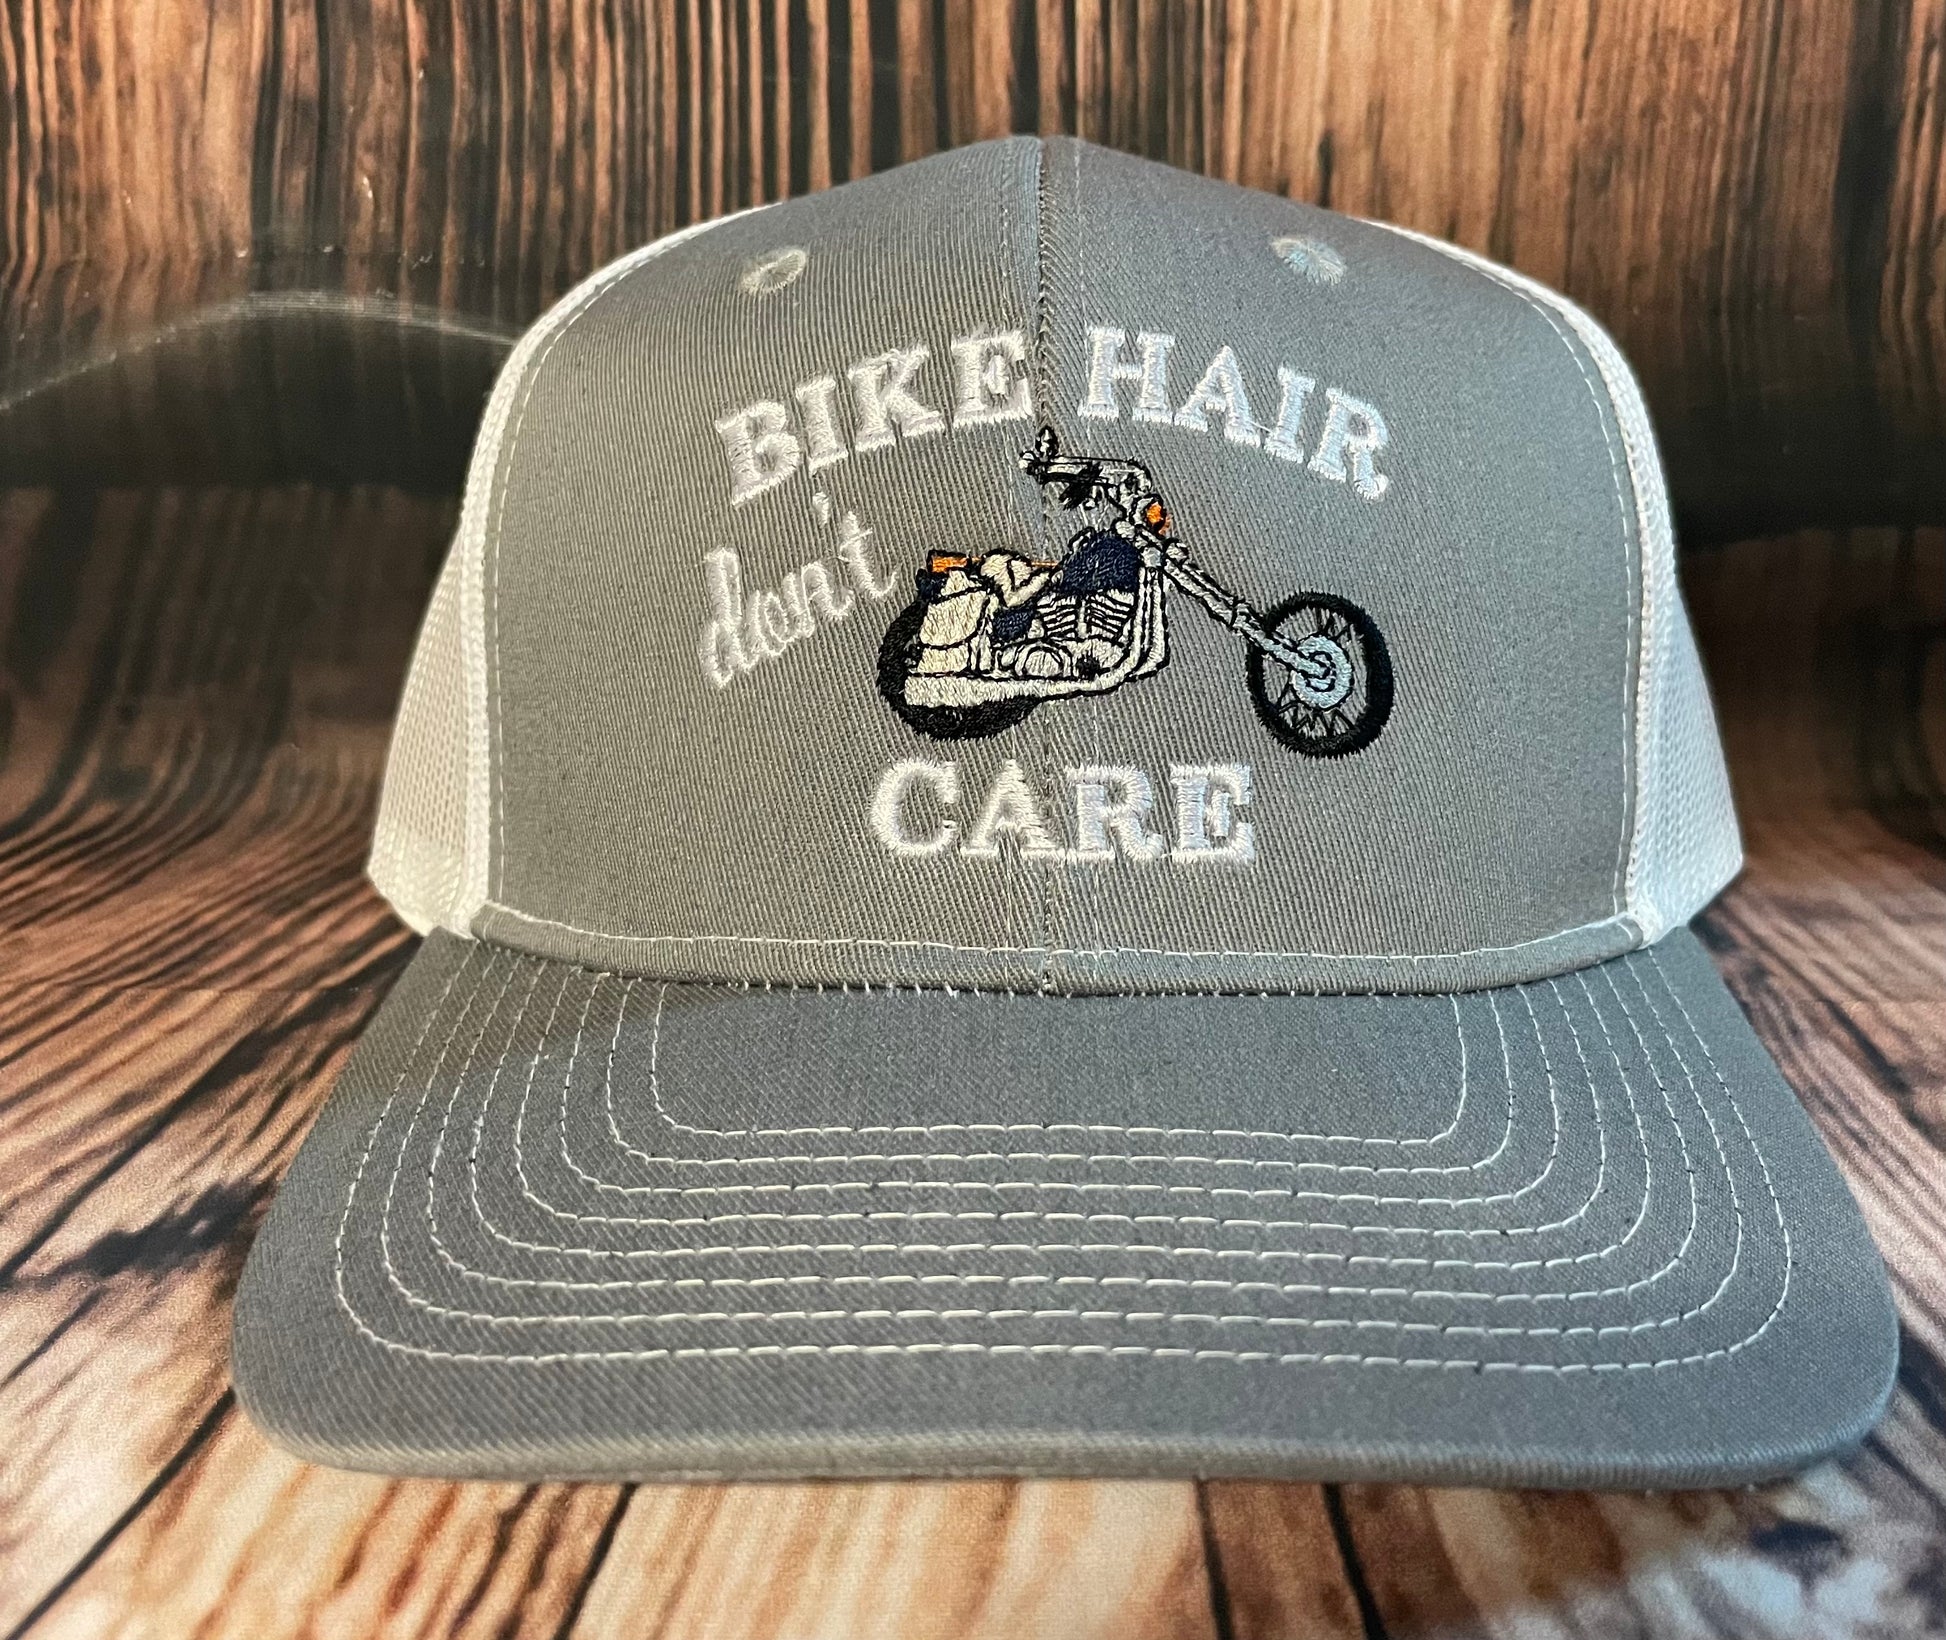 Bike Hair Don't Care Hat